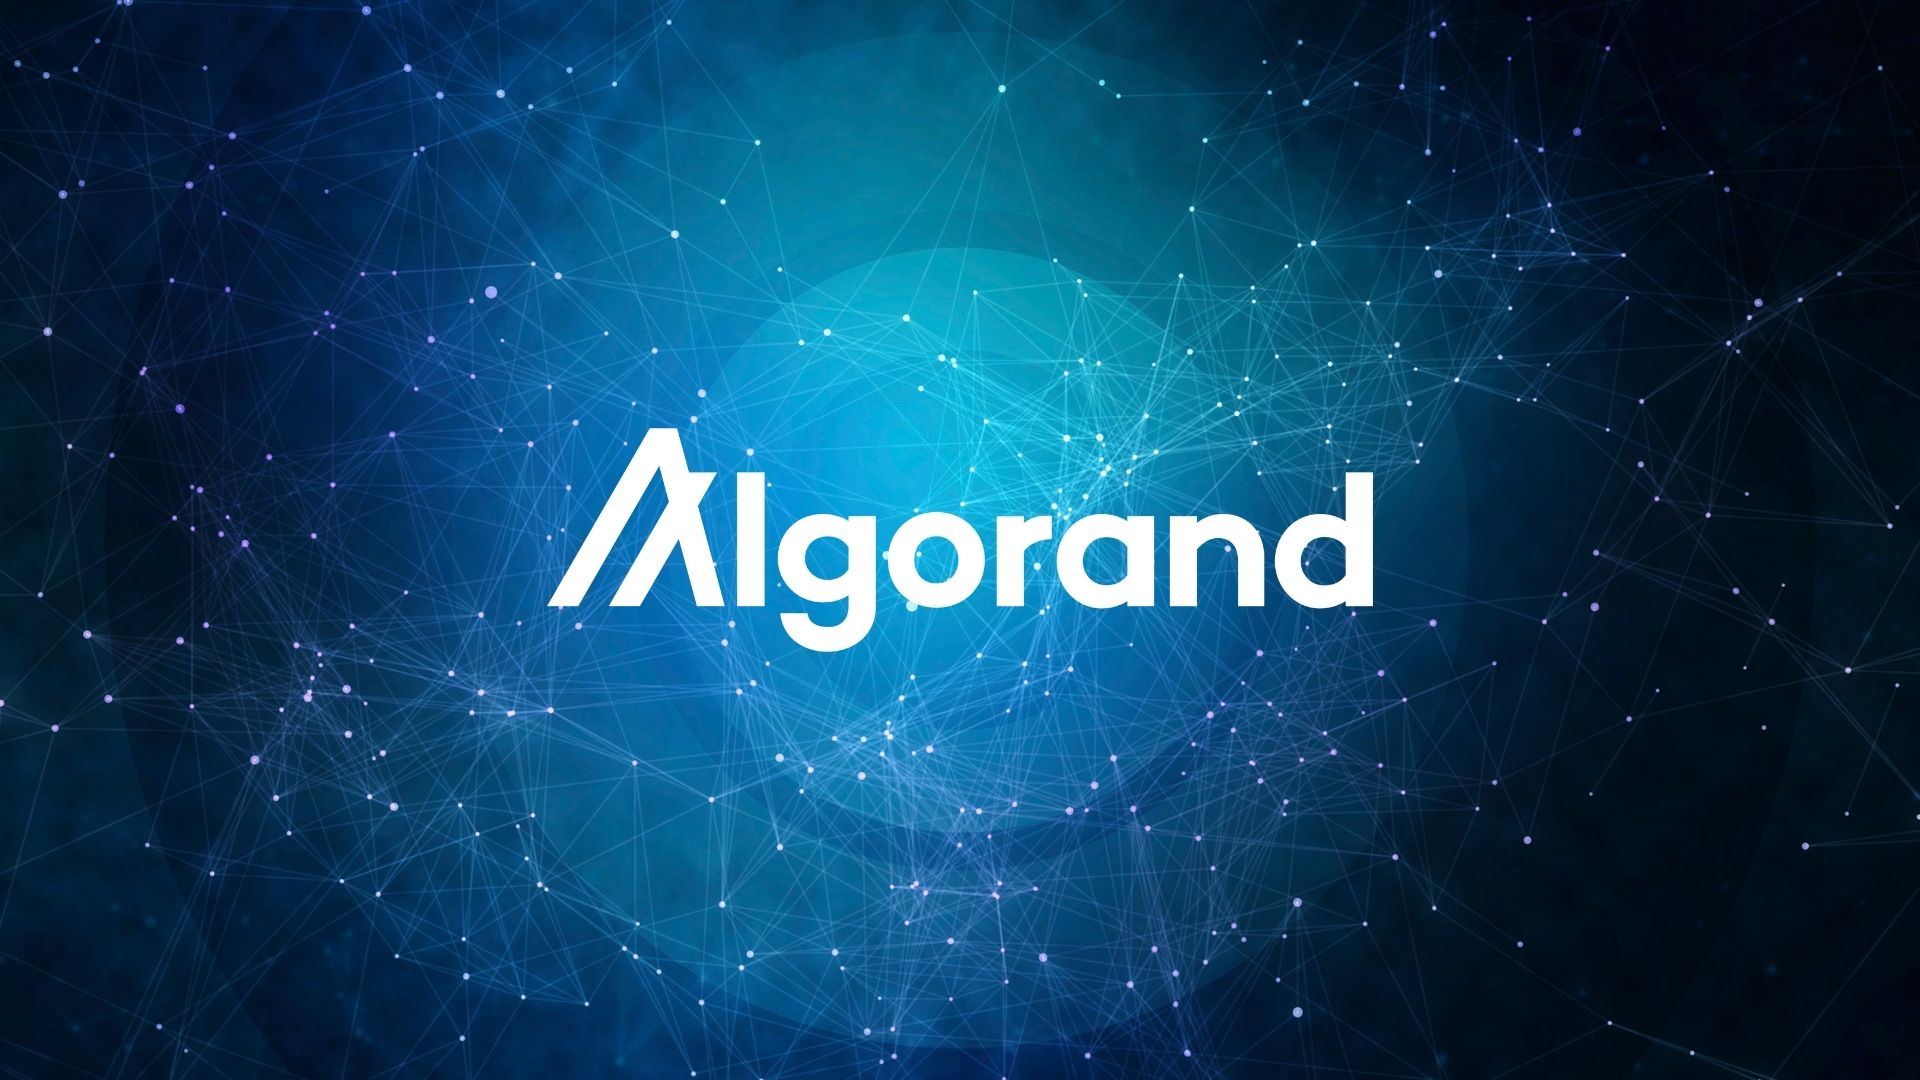 Algorand Blockchain signs sponsorship deal with FIFA